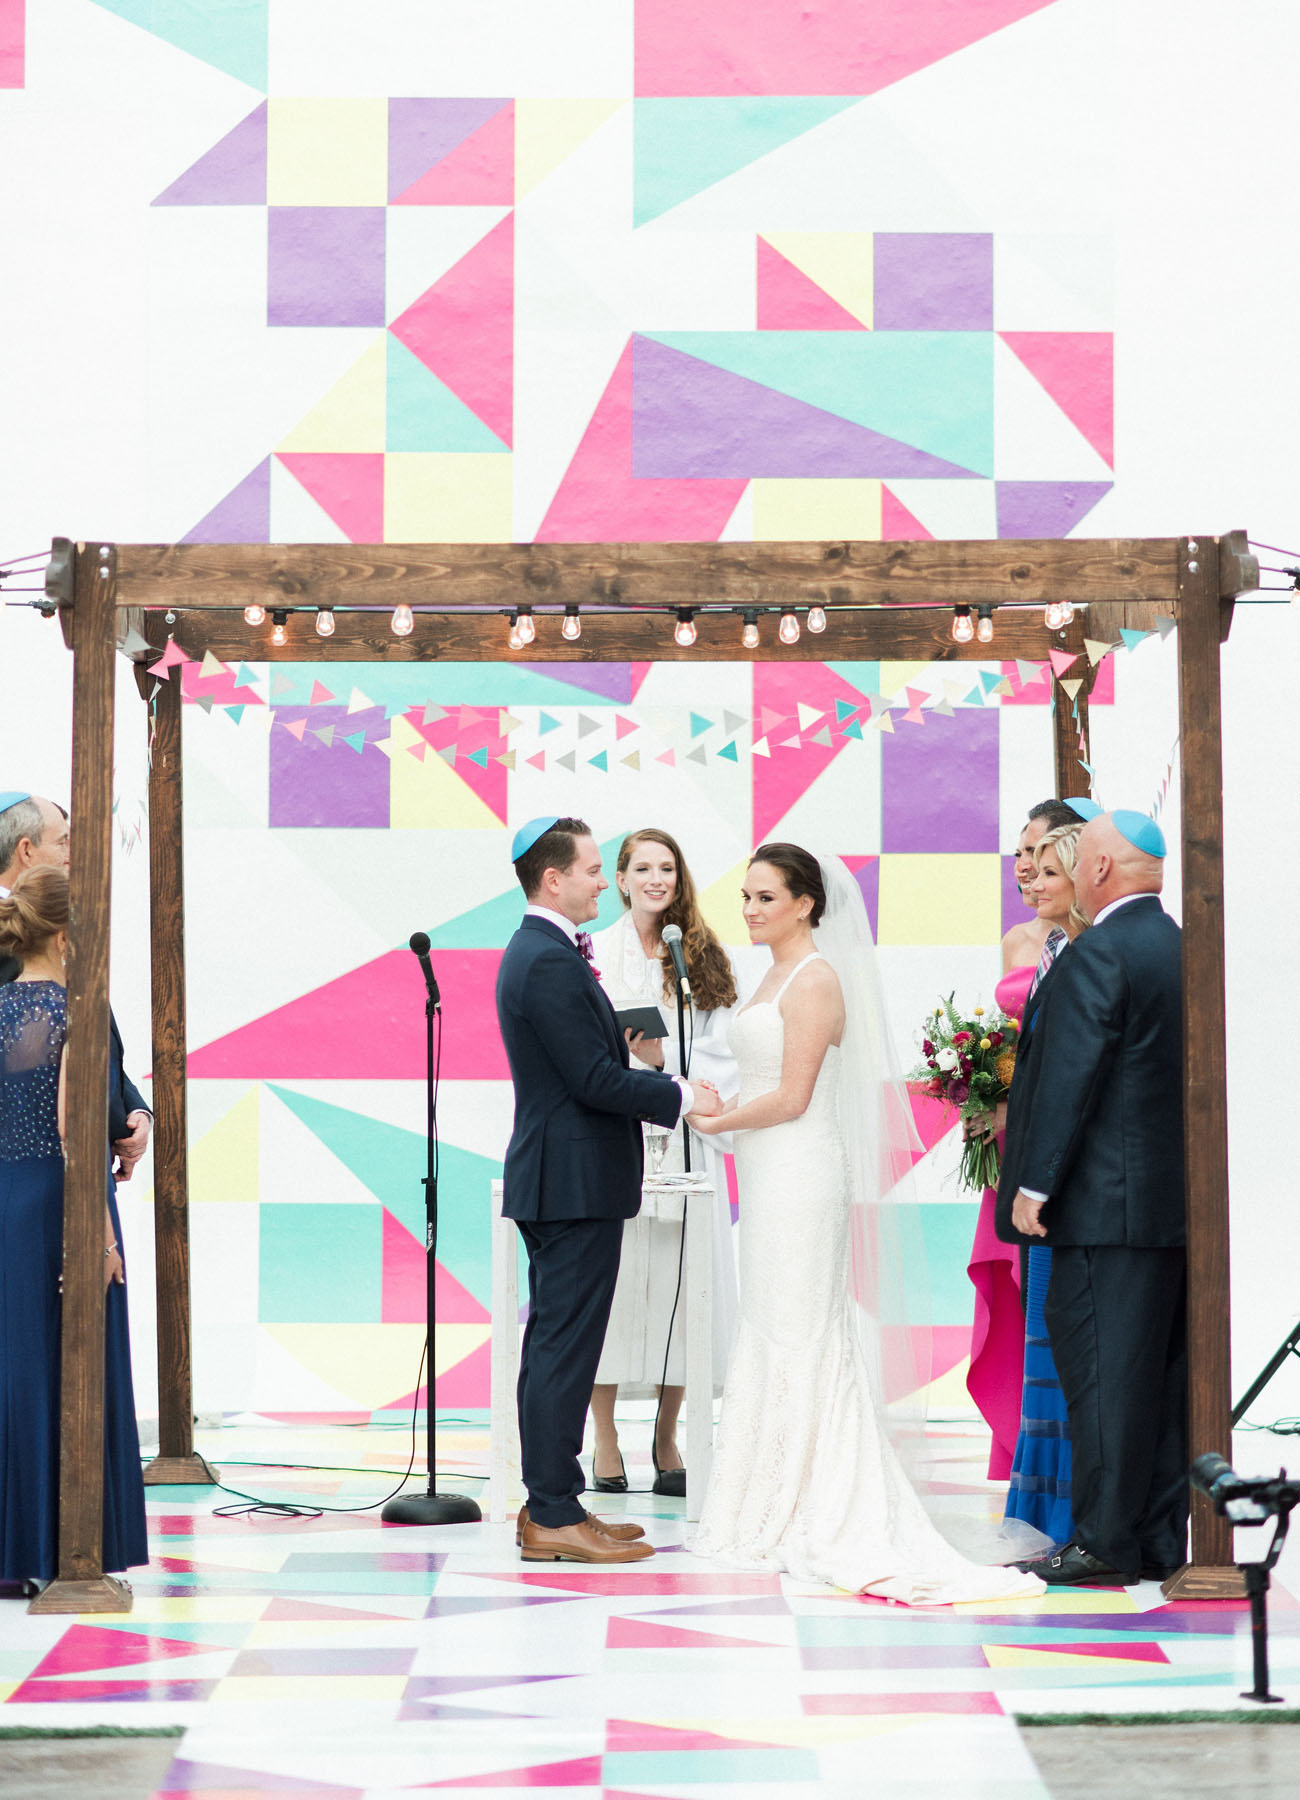 Colorful Geometric Wedding